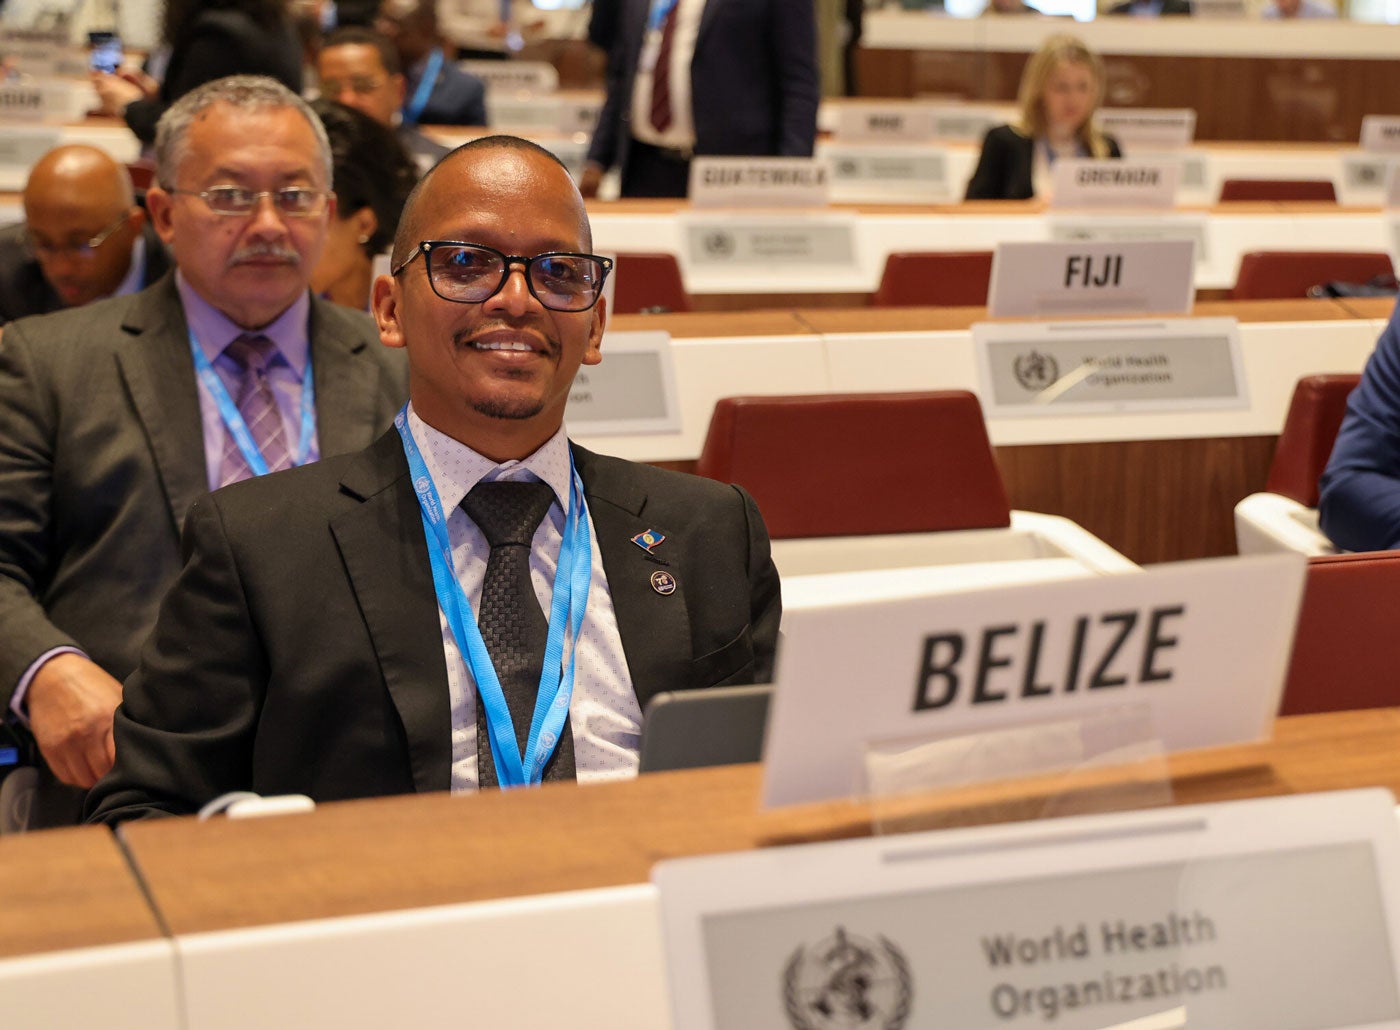 Minister of Health and Wellness of Belize Kevin Bernard